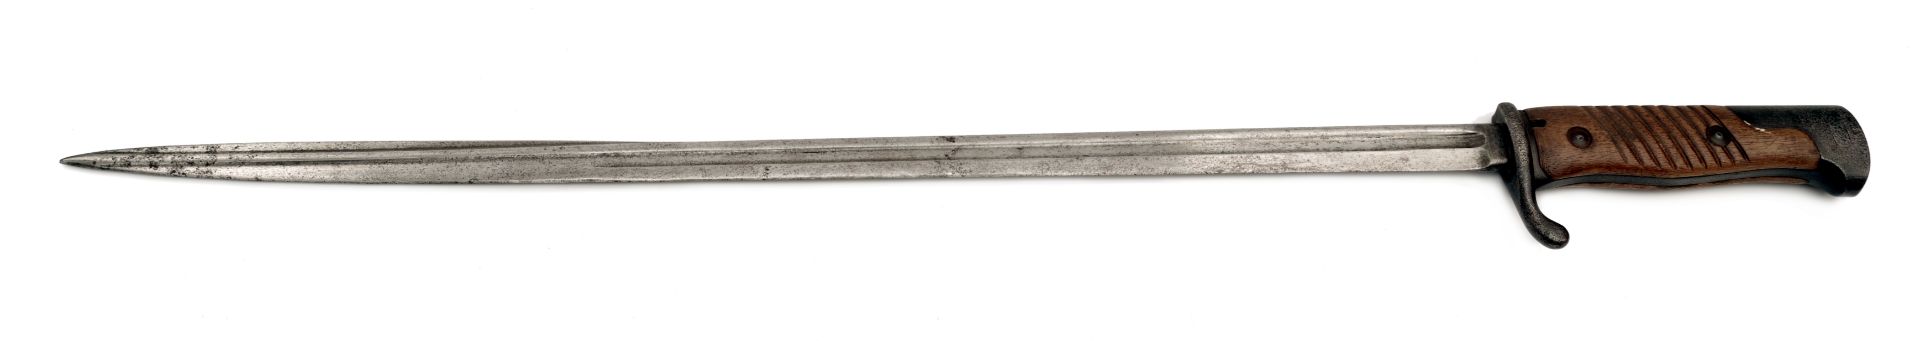 Long First Pattern Bayonet M1898 by Erfurt